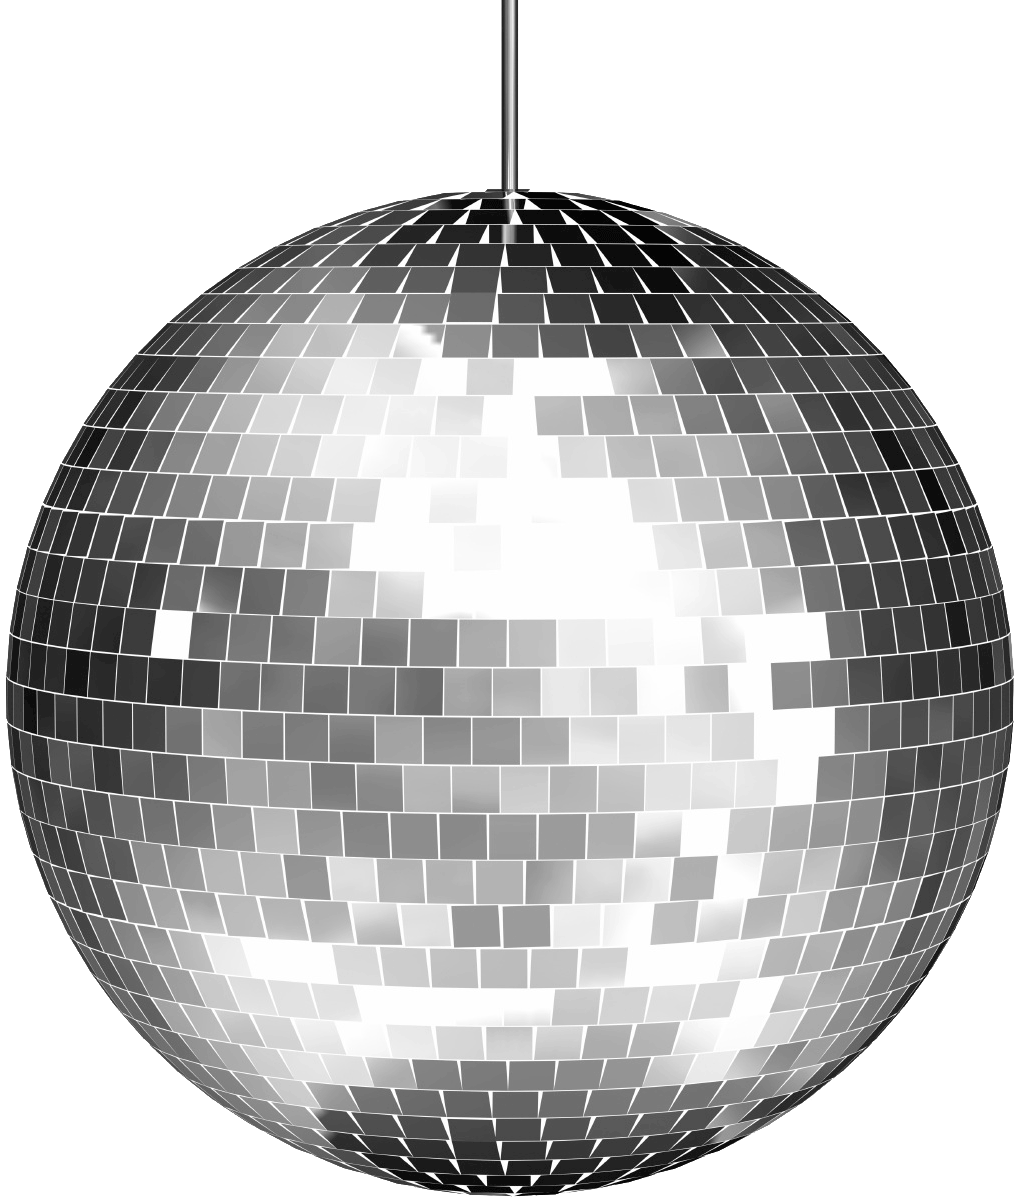 Disco Ball Image - ClipArt .